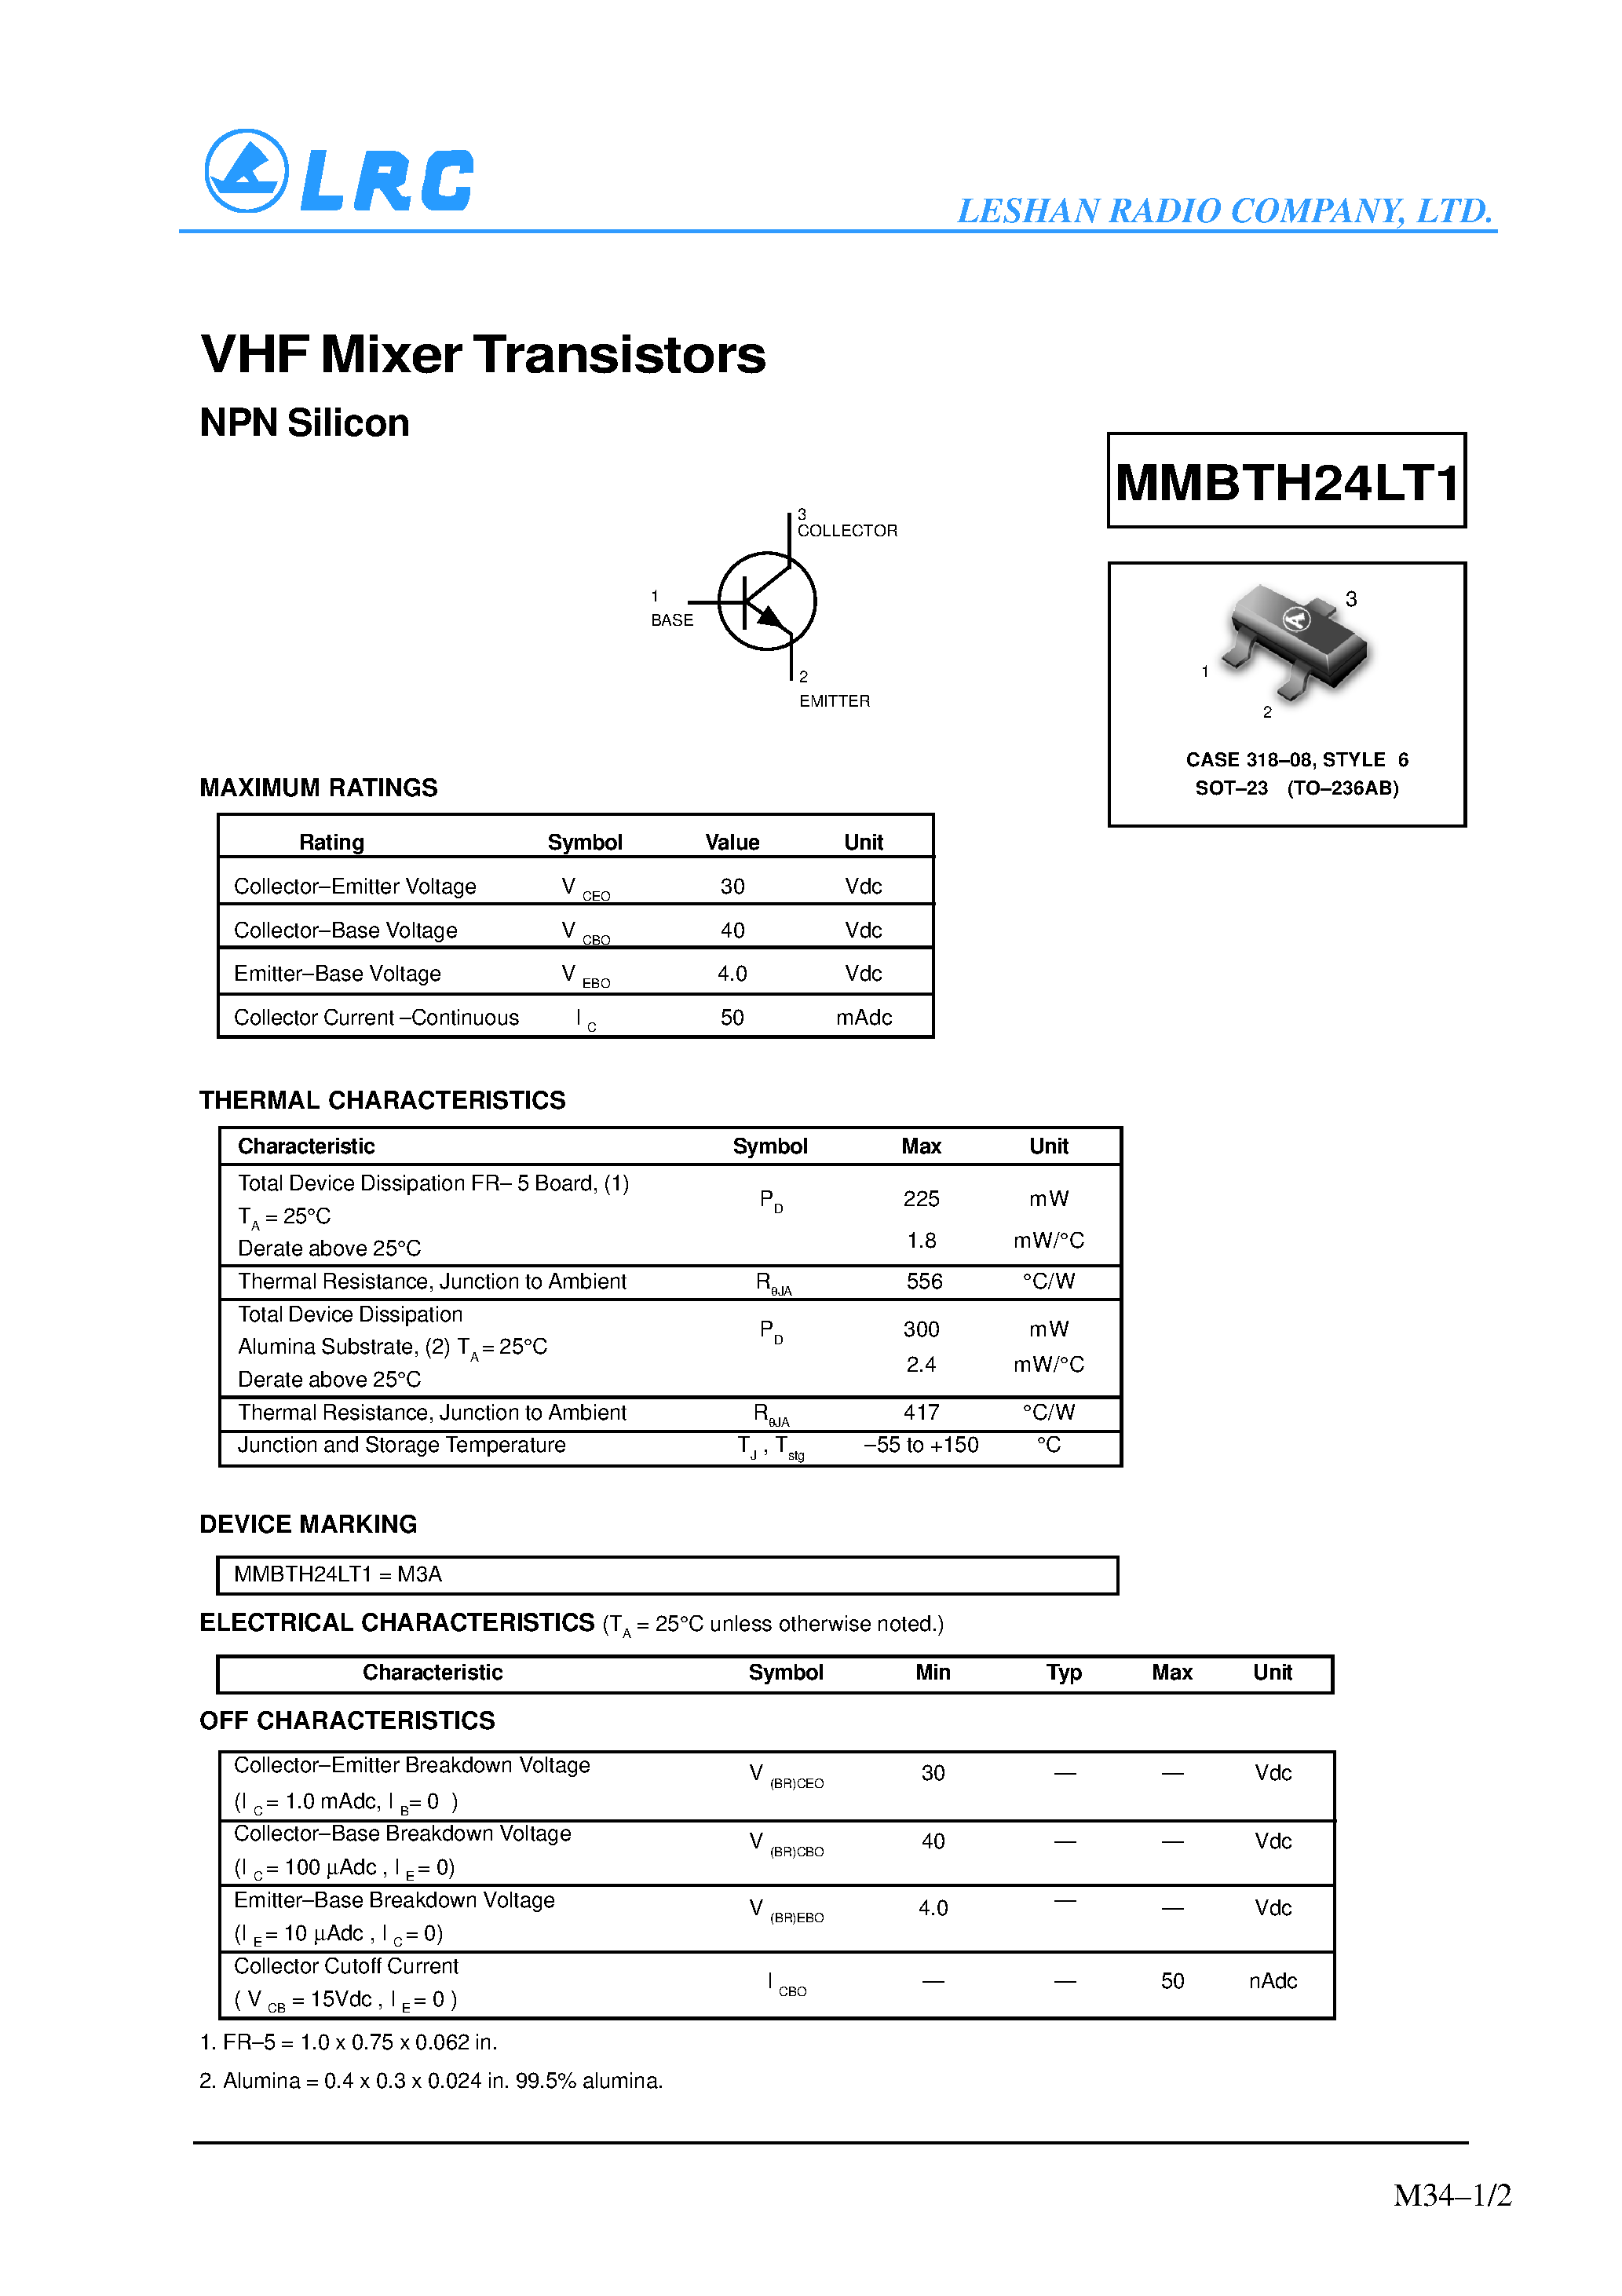 Datasheet MMBTH24LT1 - VHF Mixer Transistors(NPN Silicon) page 1